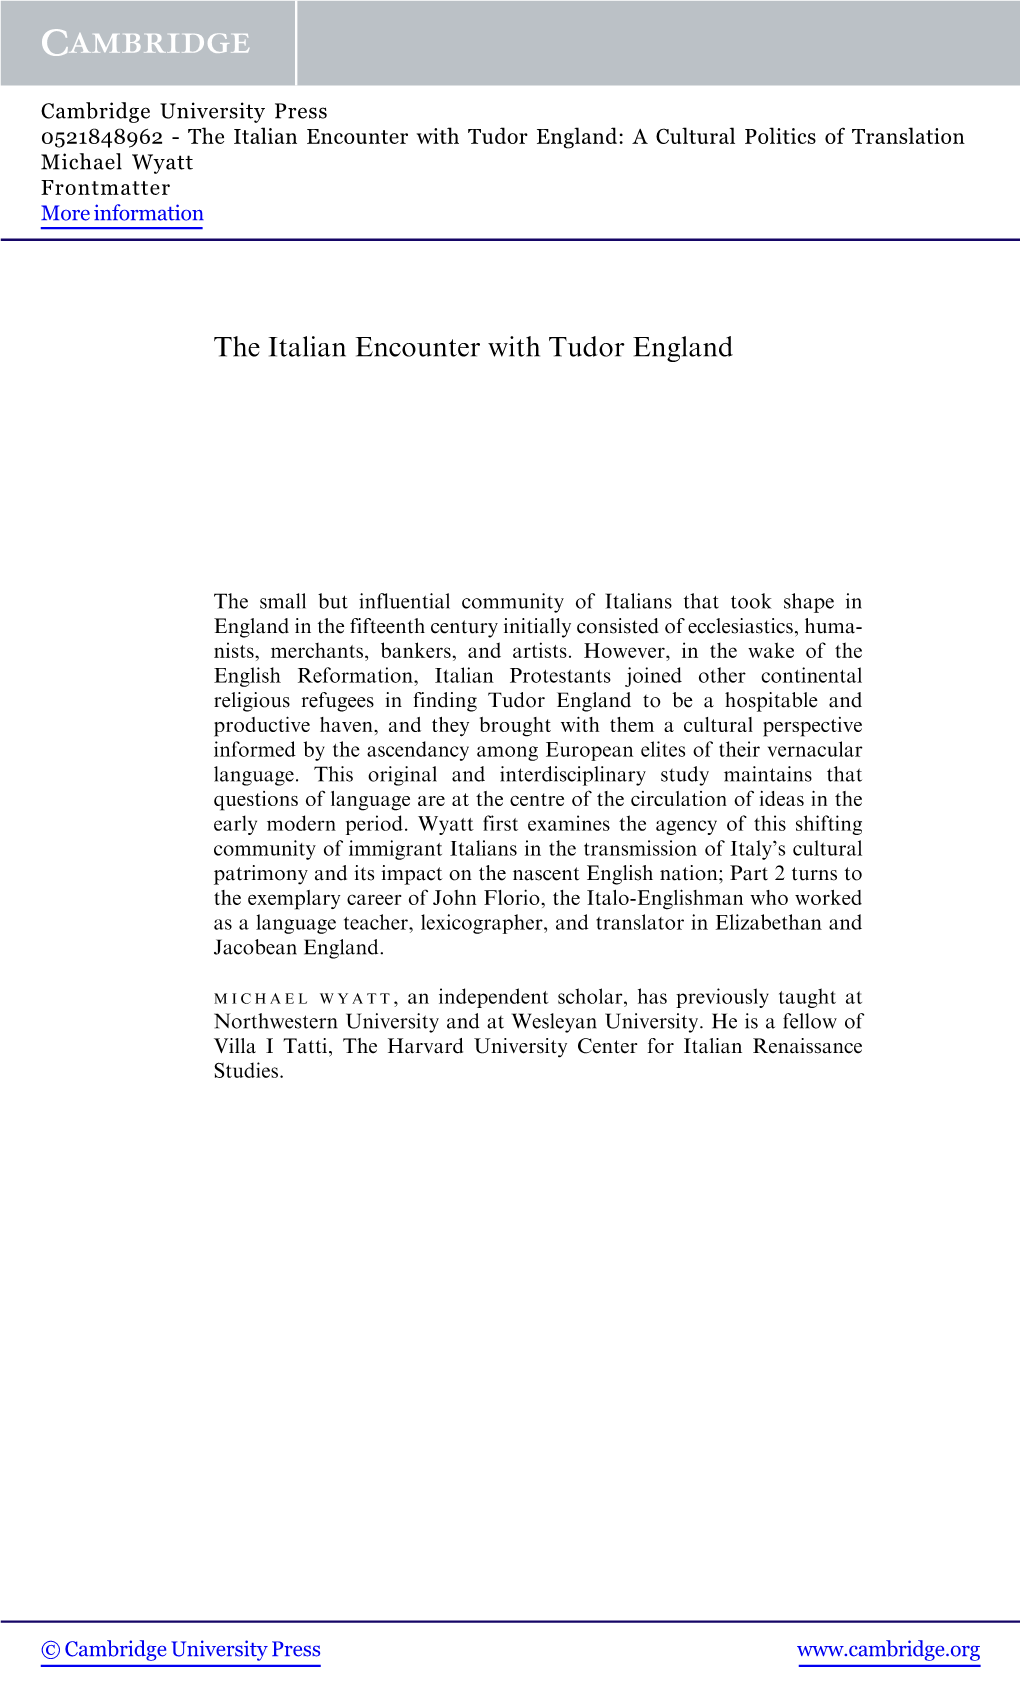 The Italian Encounter with Tudor England: a Cultural Politics of Translation Michael Wyatt Frontmatter More Information